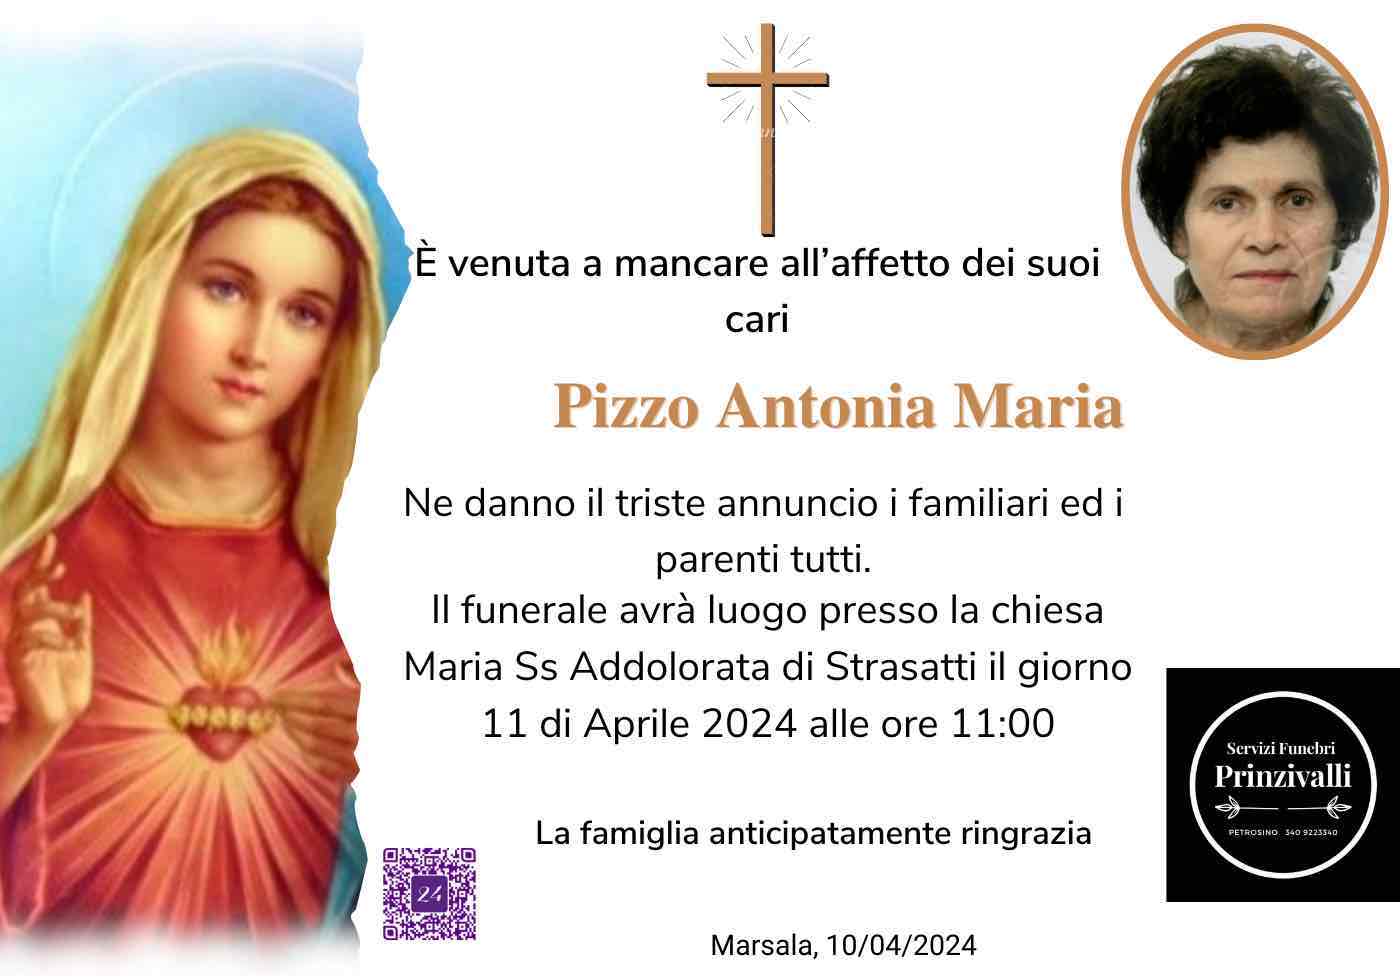 Antonia Maria Pizzo